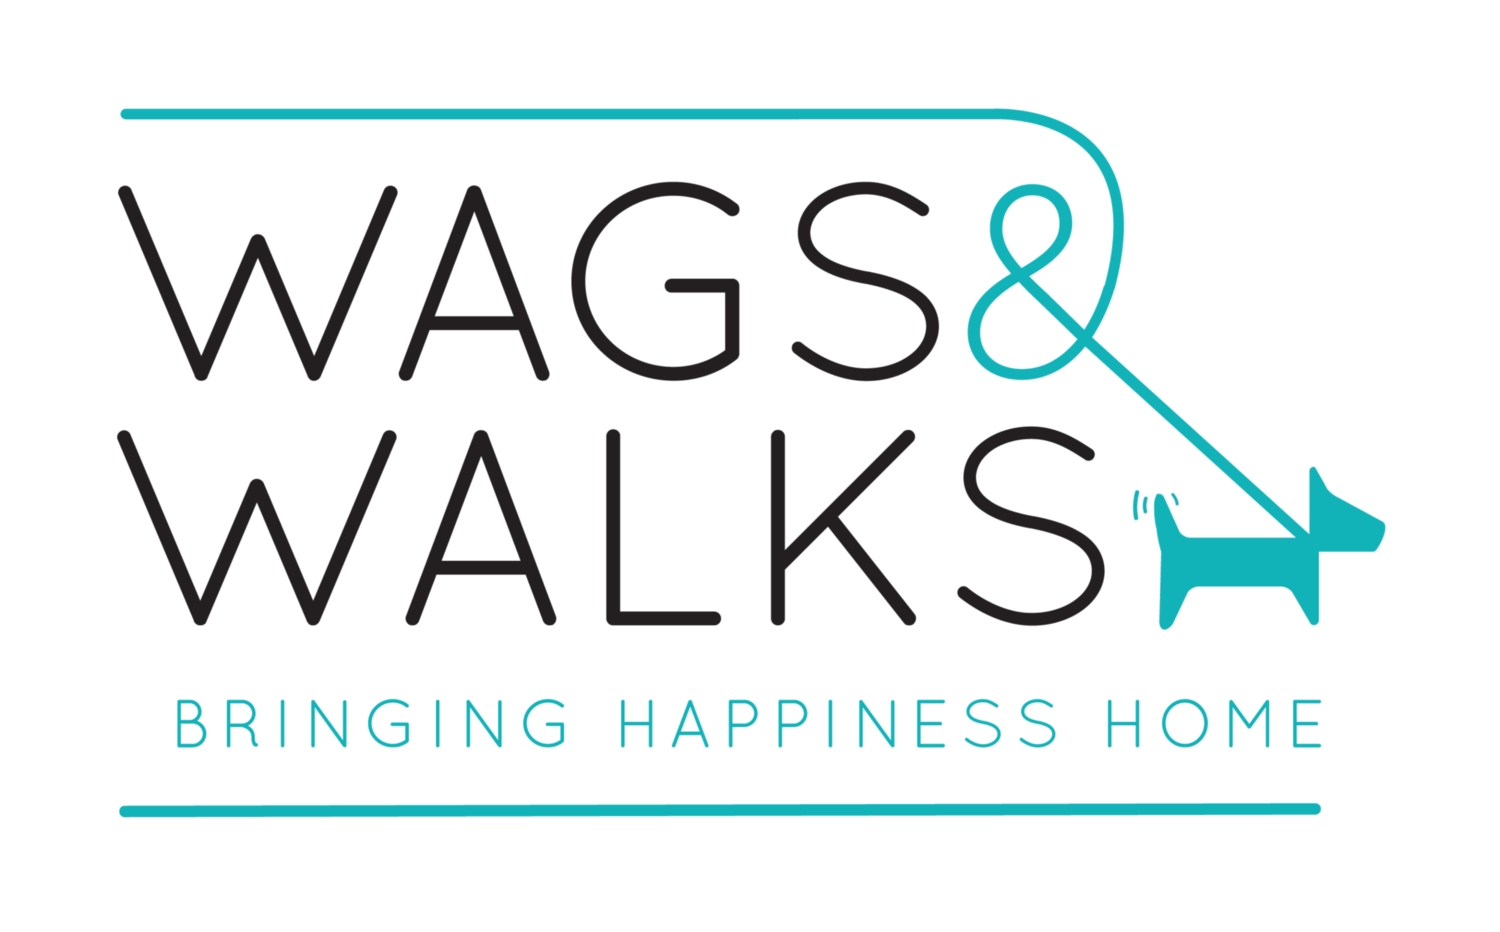 Wags & Walks logo